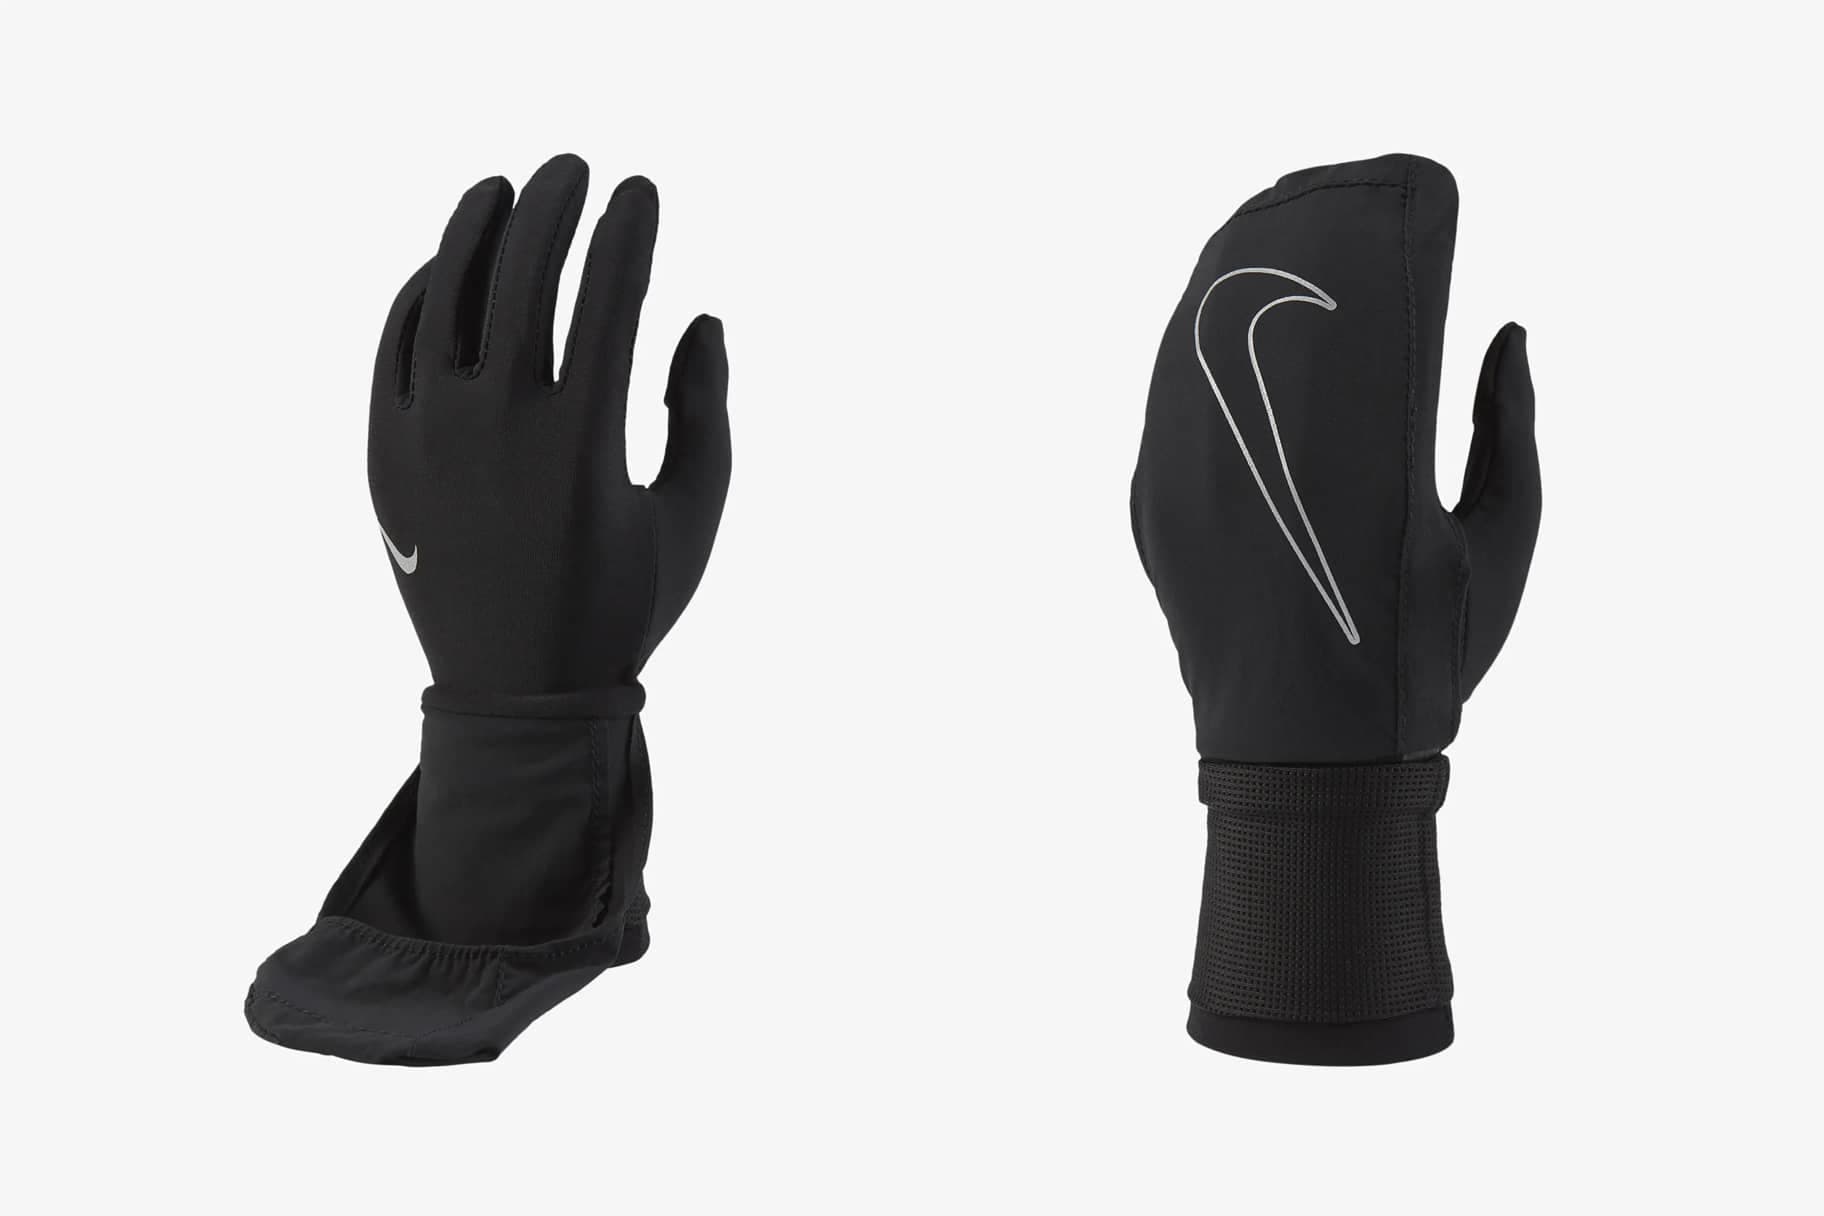 Representar Ruina Asociar The 5 Best Running Gloves You Can Buy at Nike. Nike.com